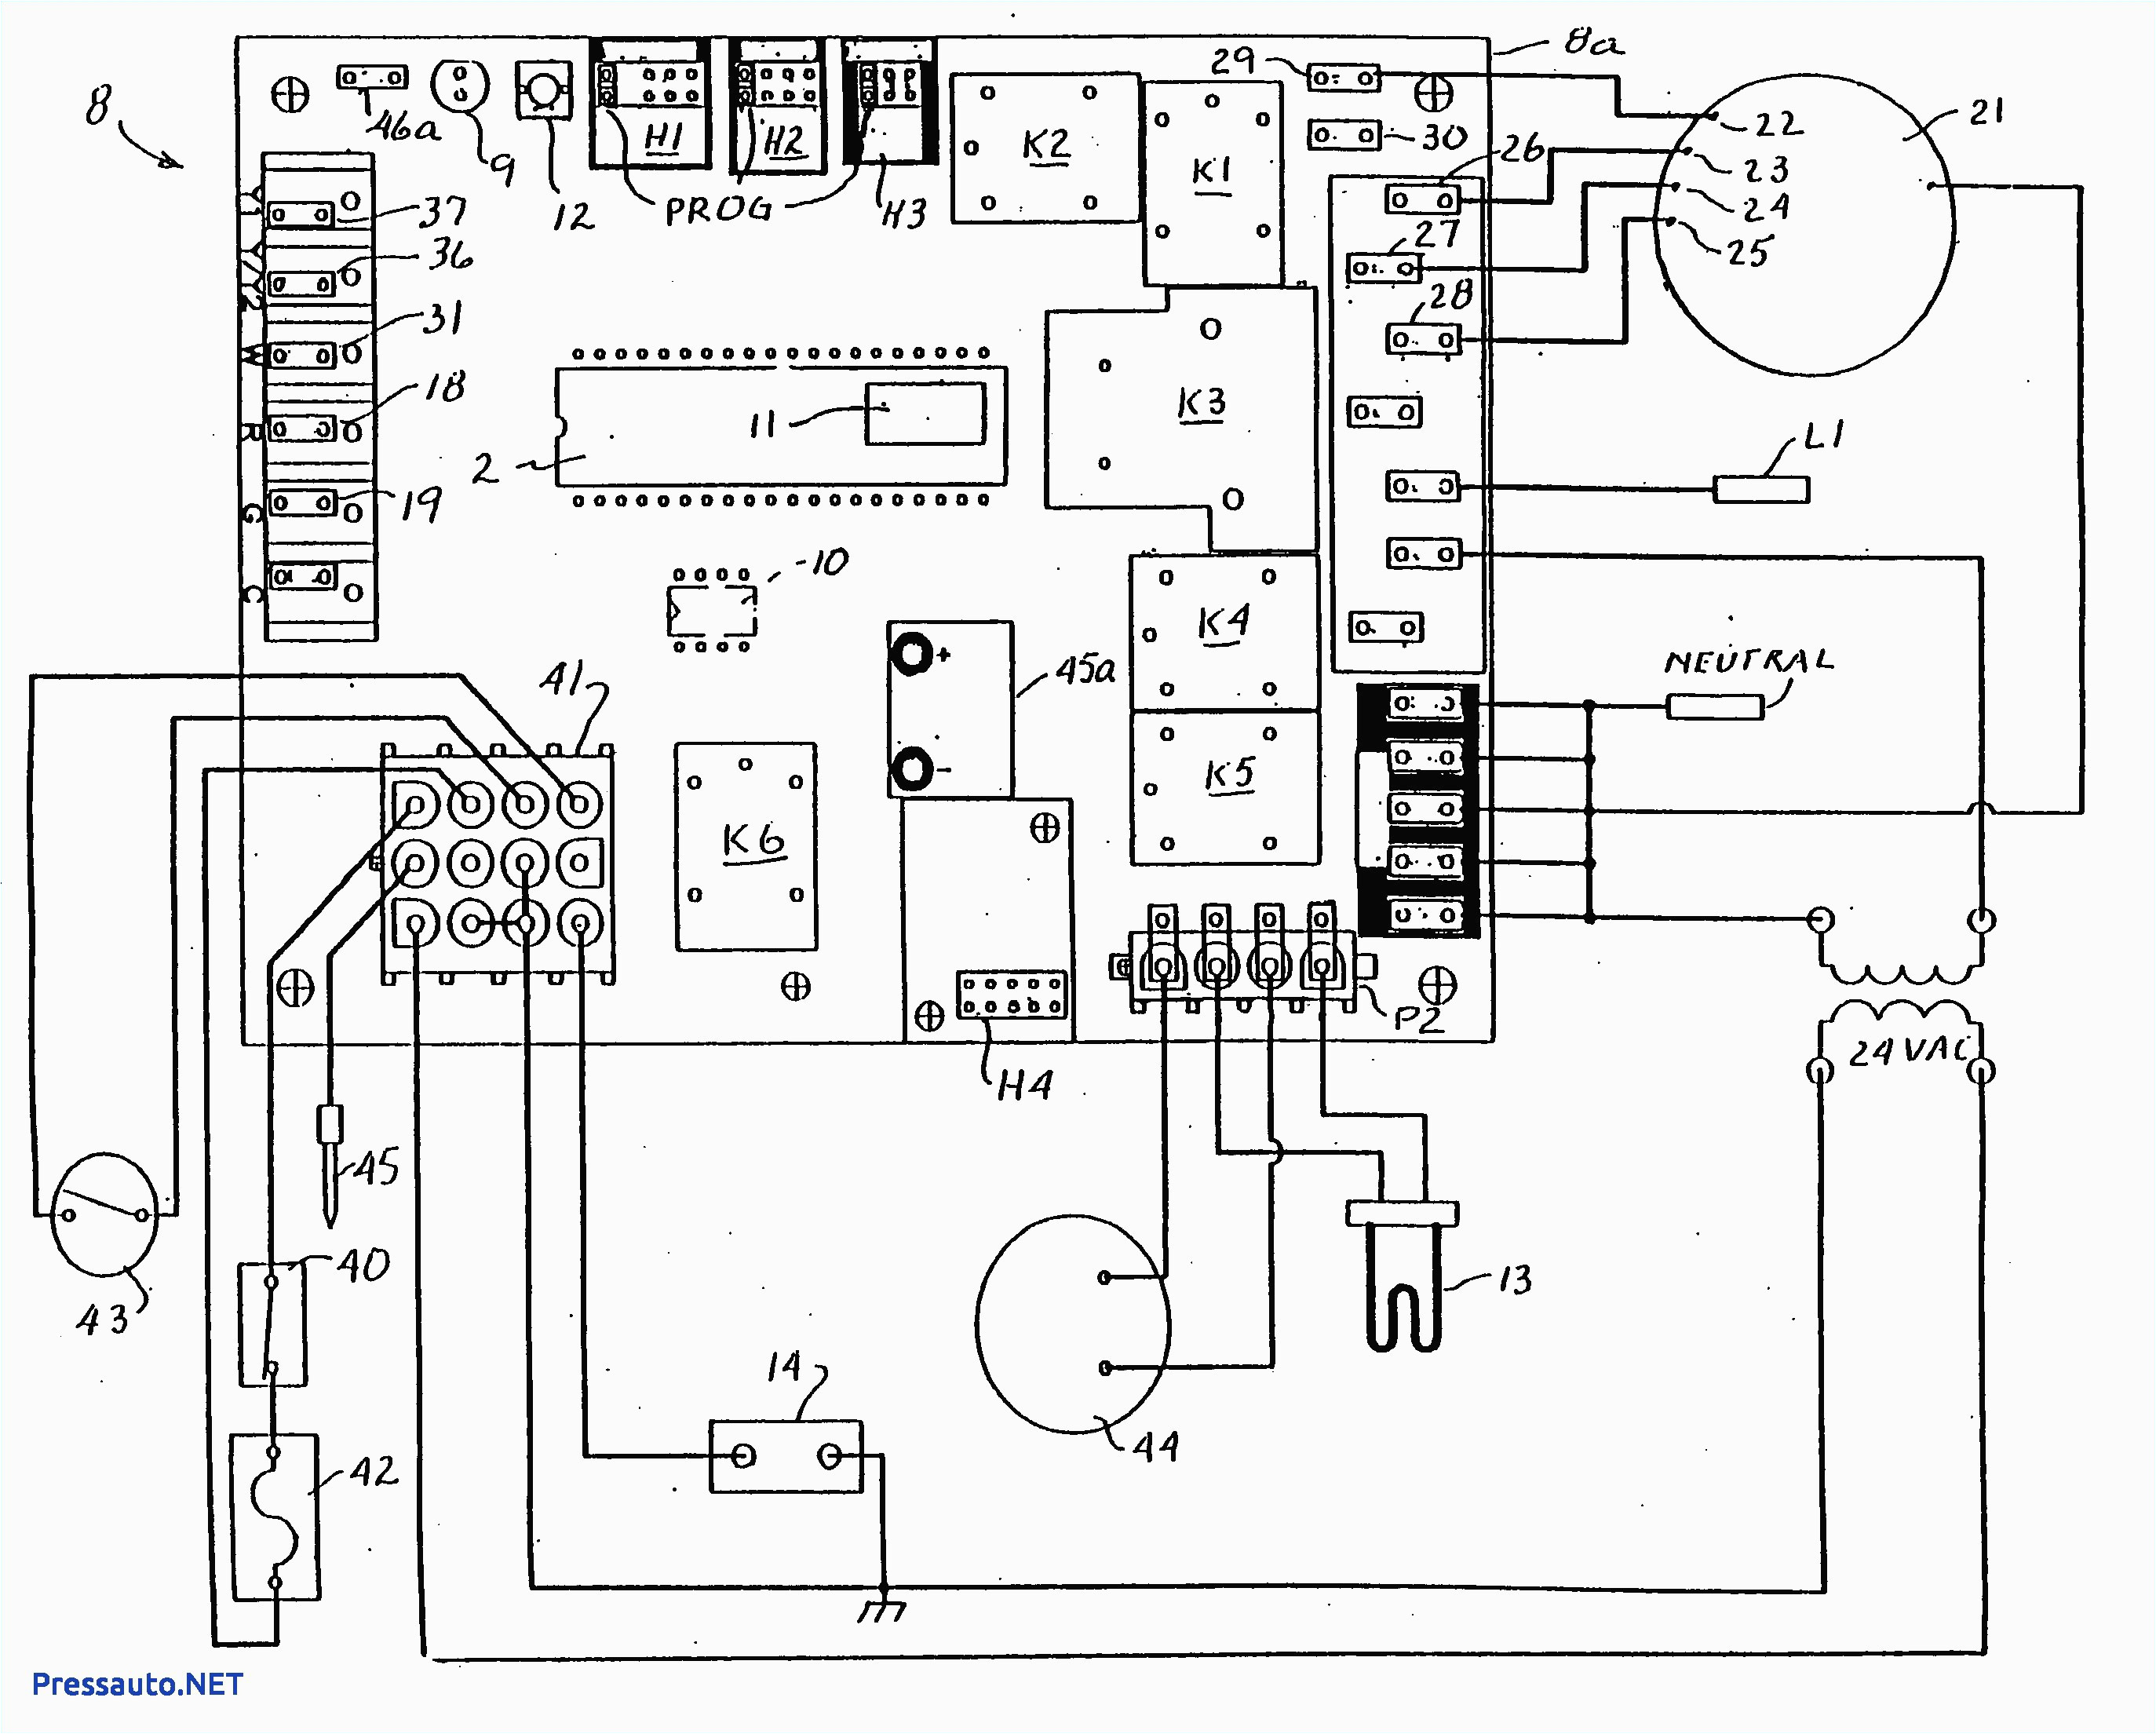 ruud furnace wiring diagram wiring diagram datasource ruud oil furnace wiring diagram ruud furnace wiring diagram